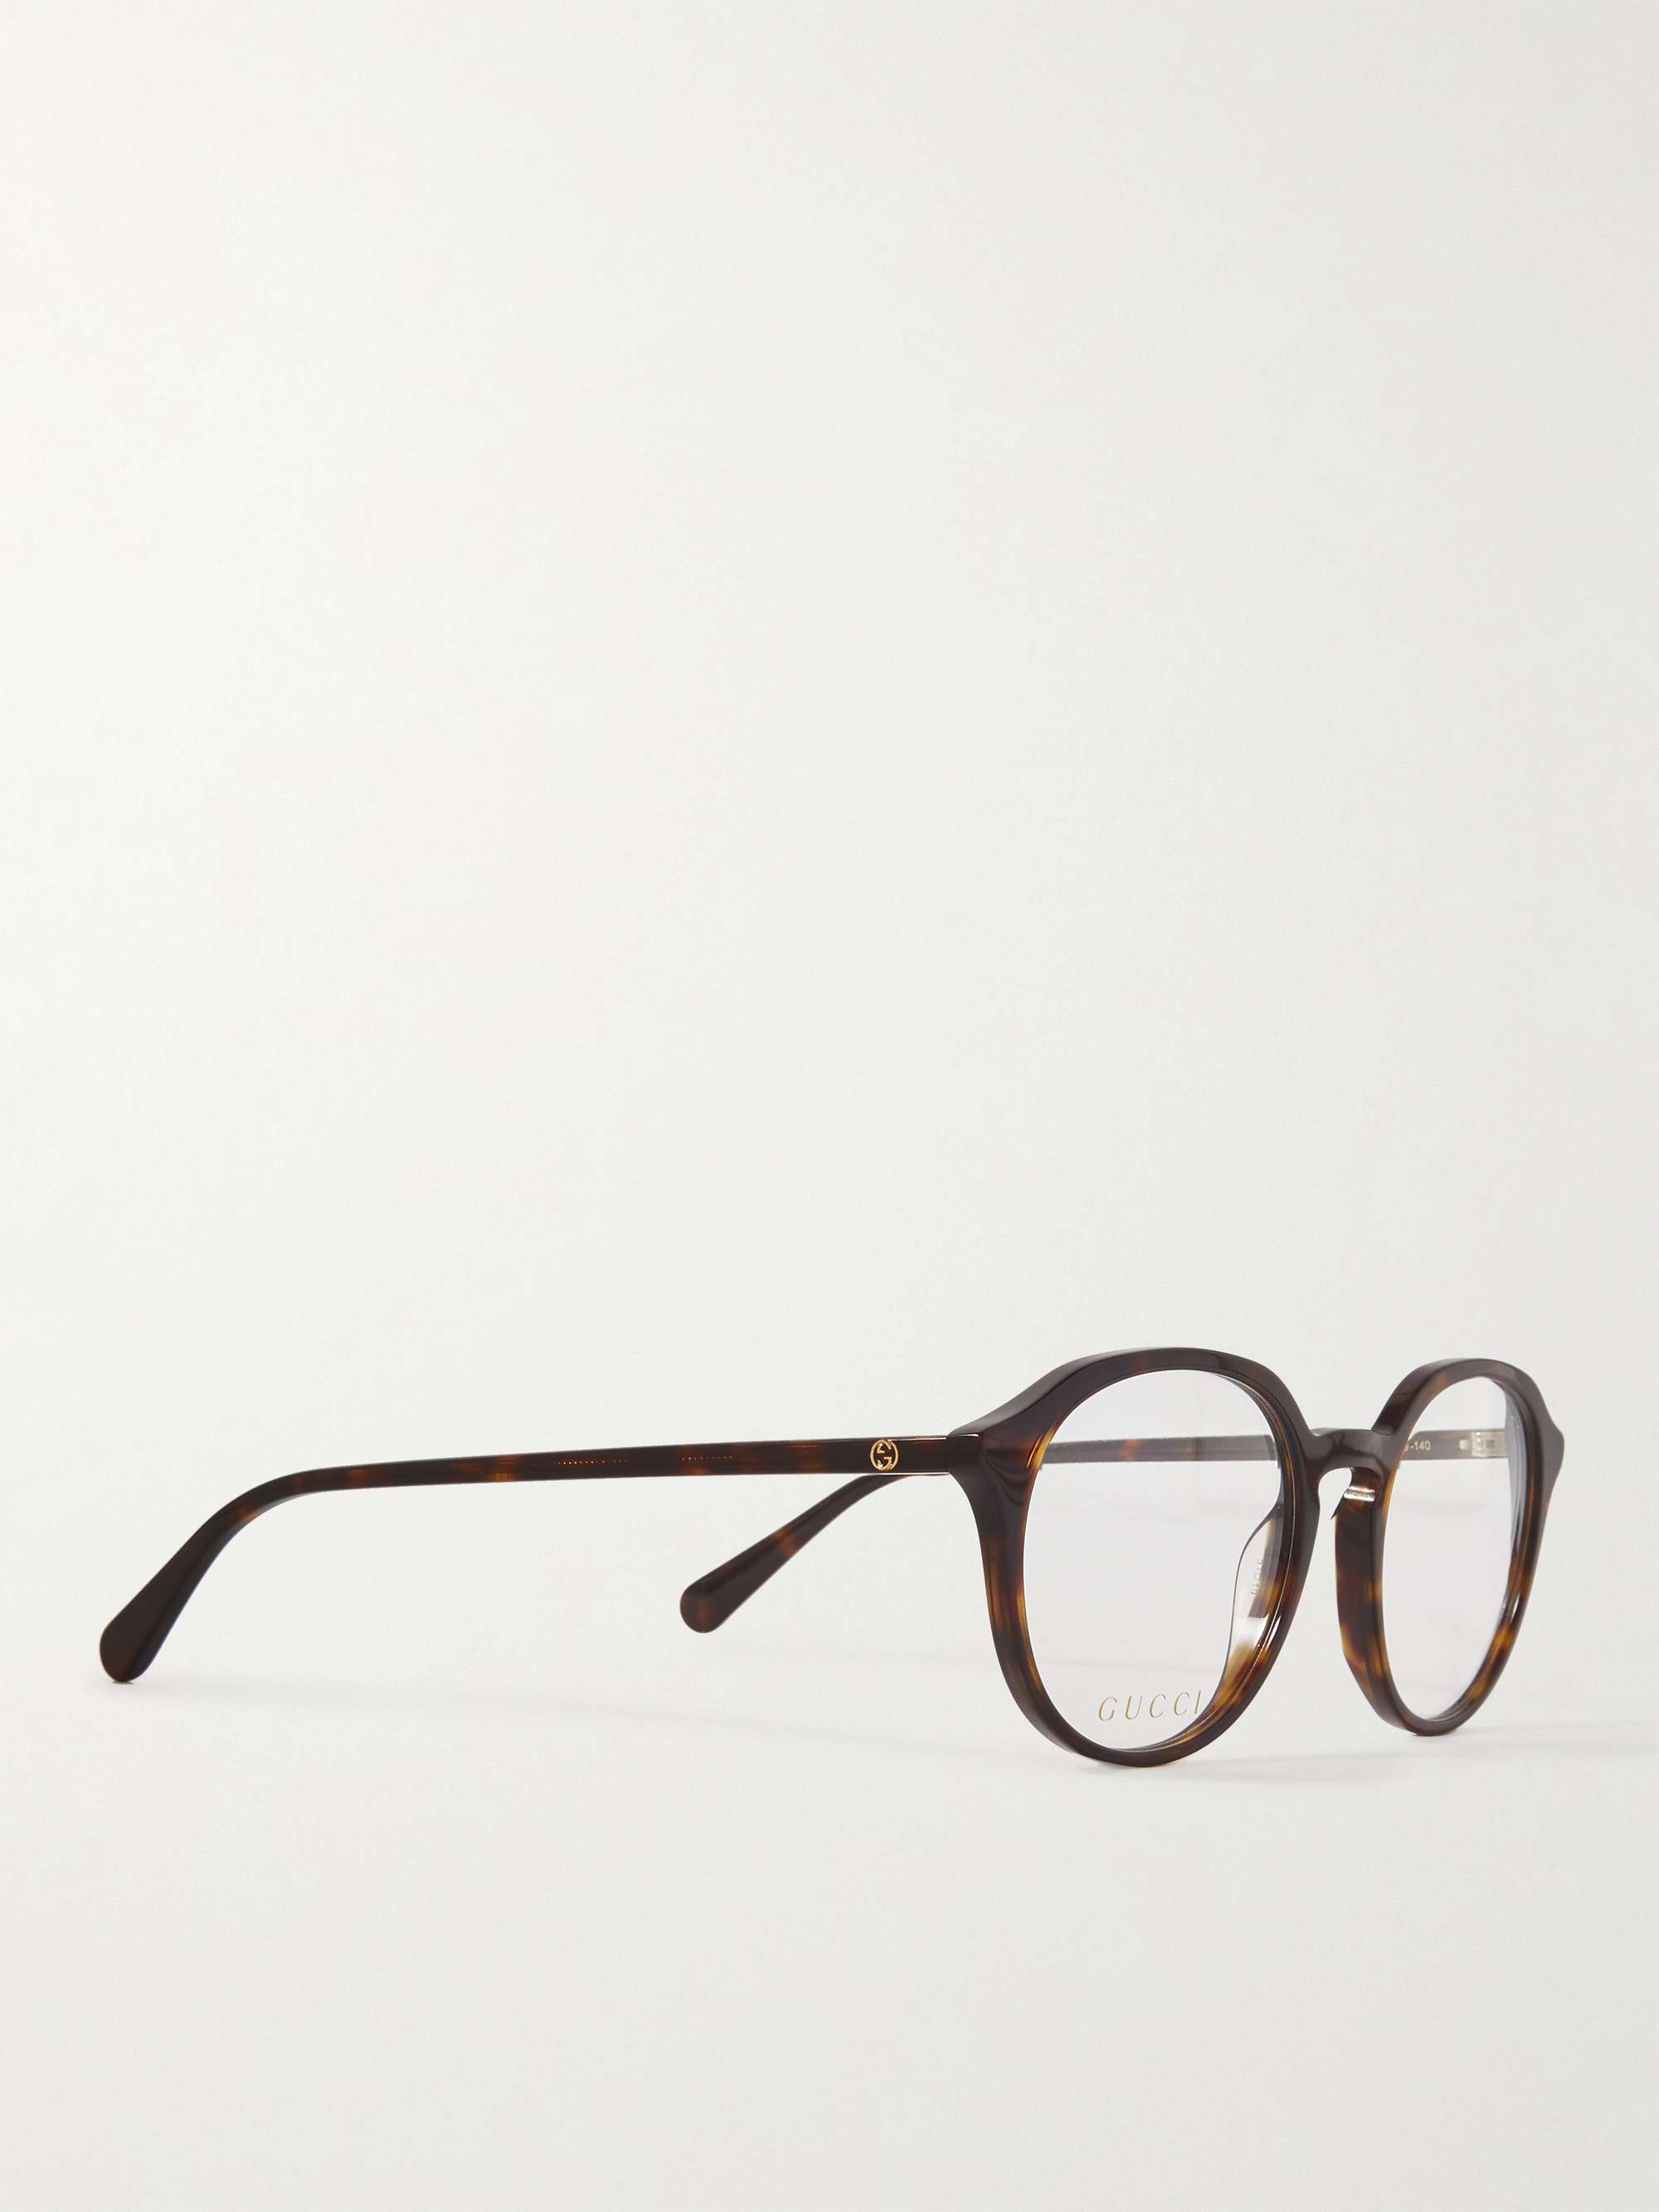 GUCCI EYEWEAR Round-Frame Tortoiseshell Acetate Optical Glasses